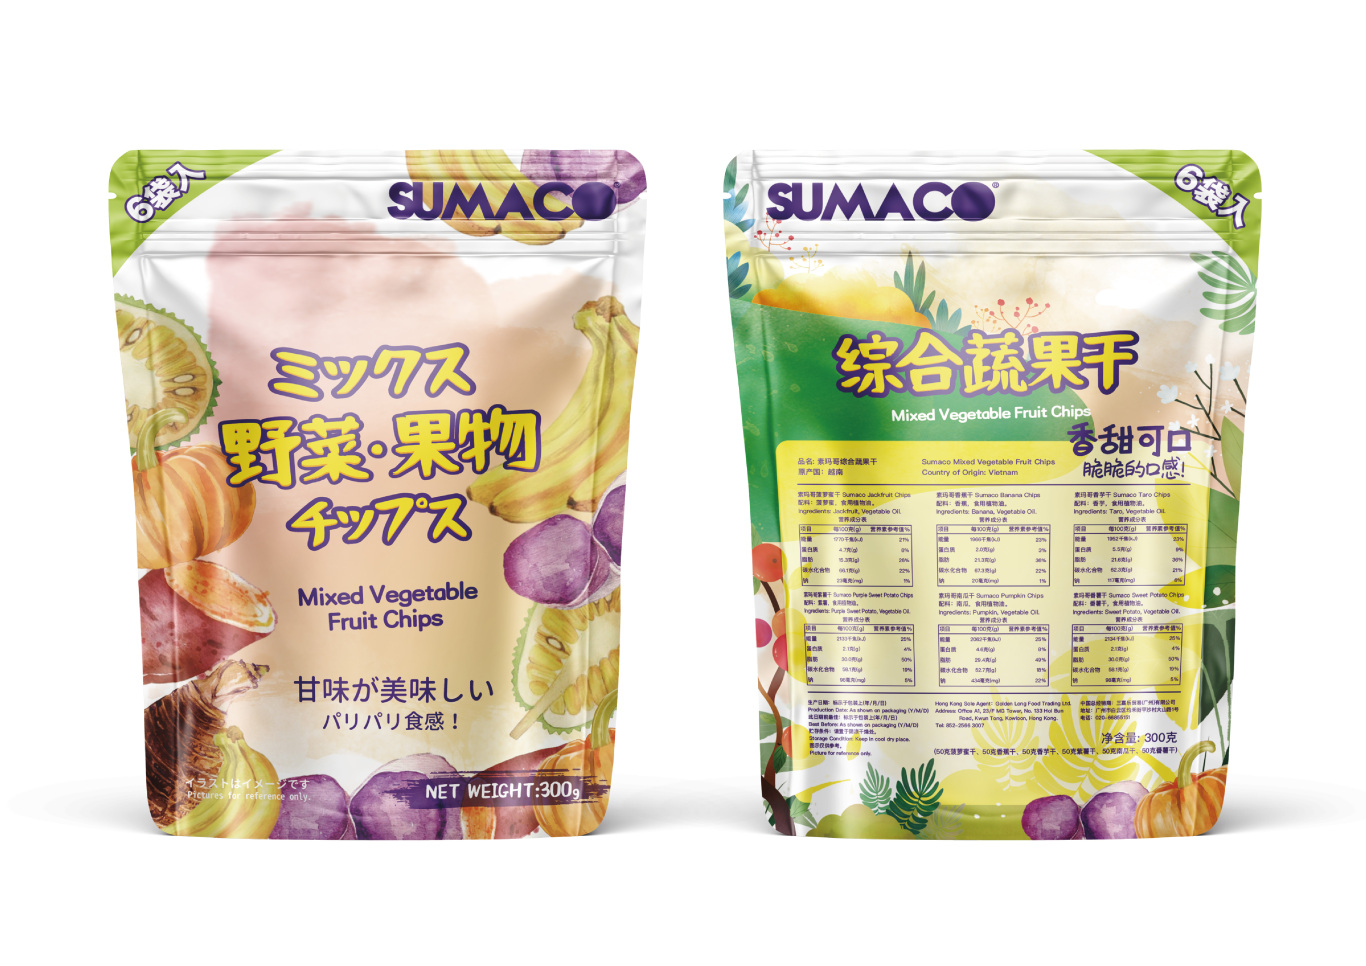 SUMACO素玛哥综合蔬果干零食产品包装设计图1